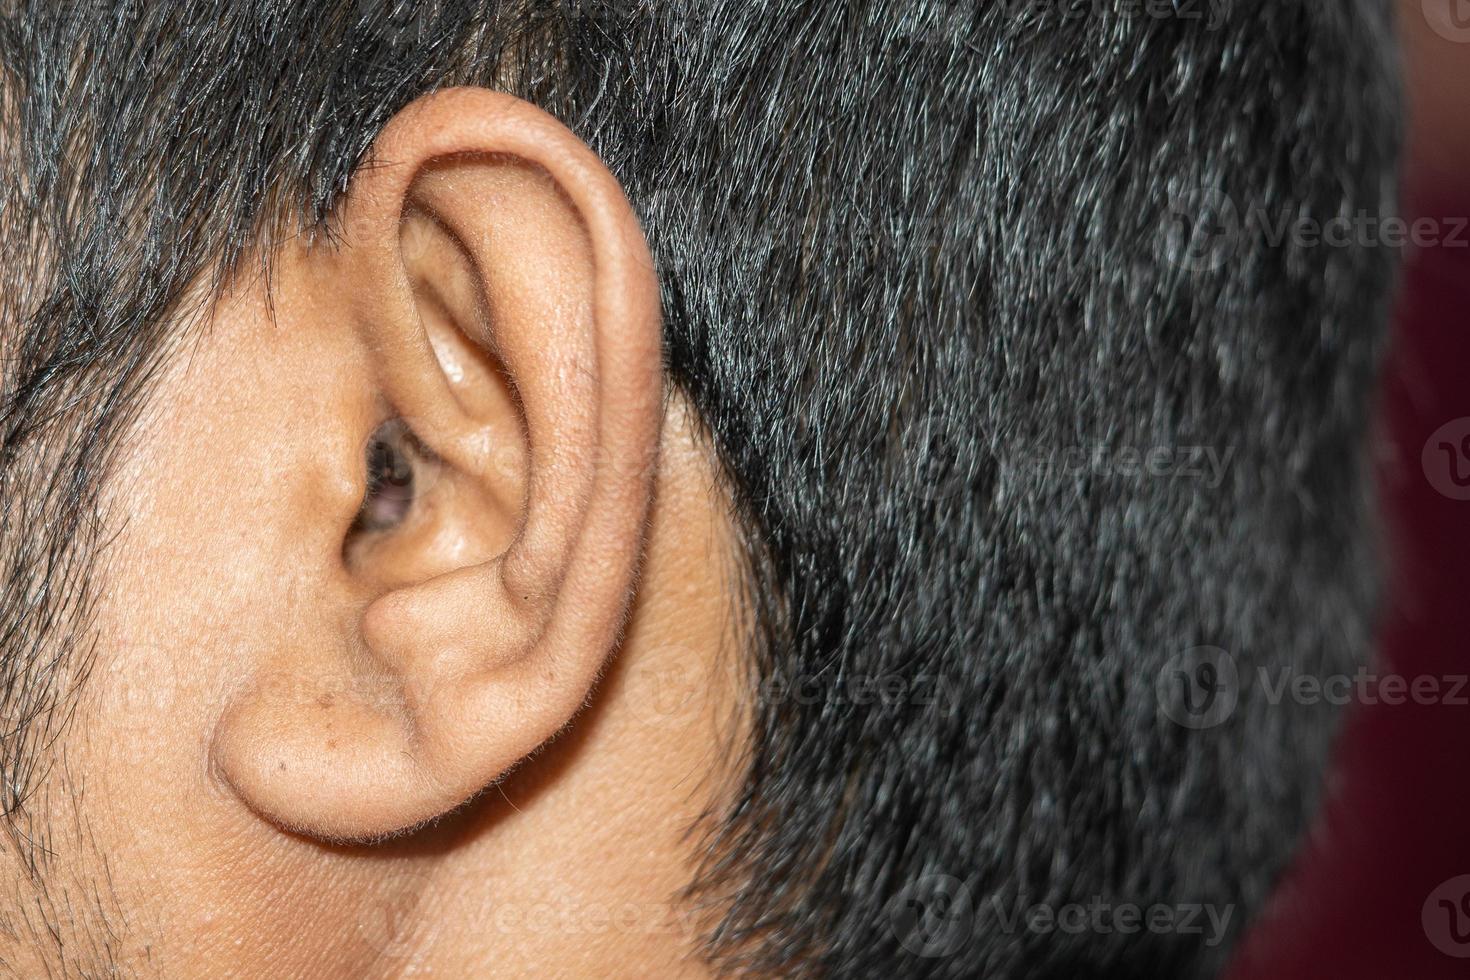 human ear close-up macro detail shot photo